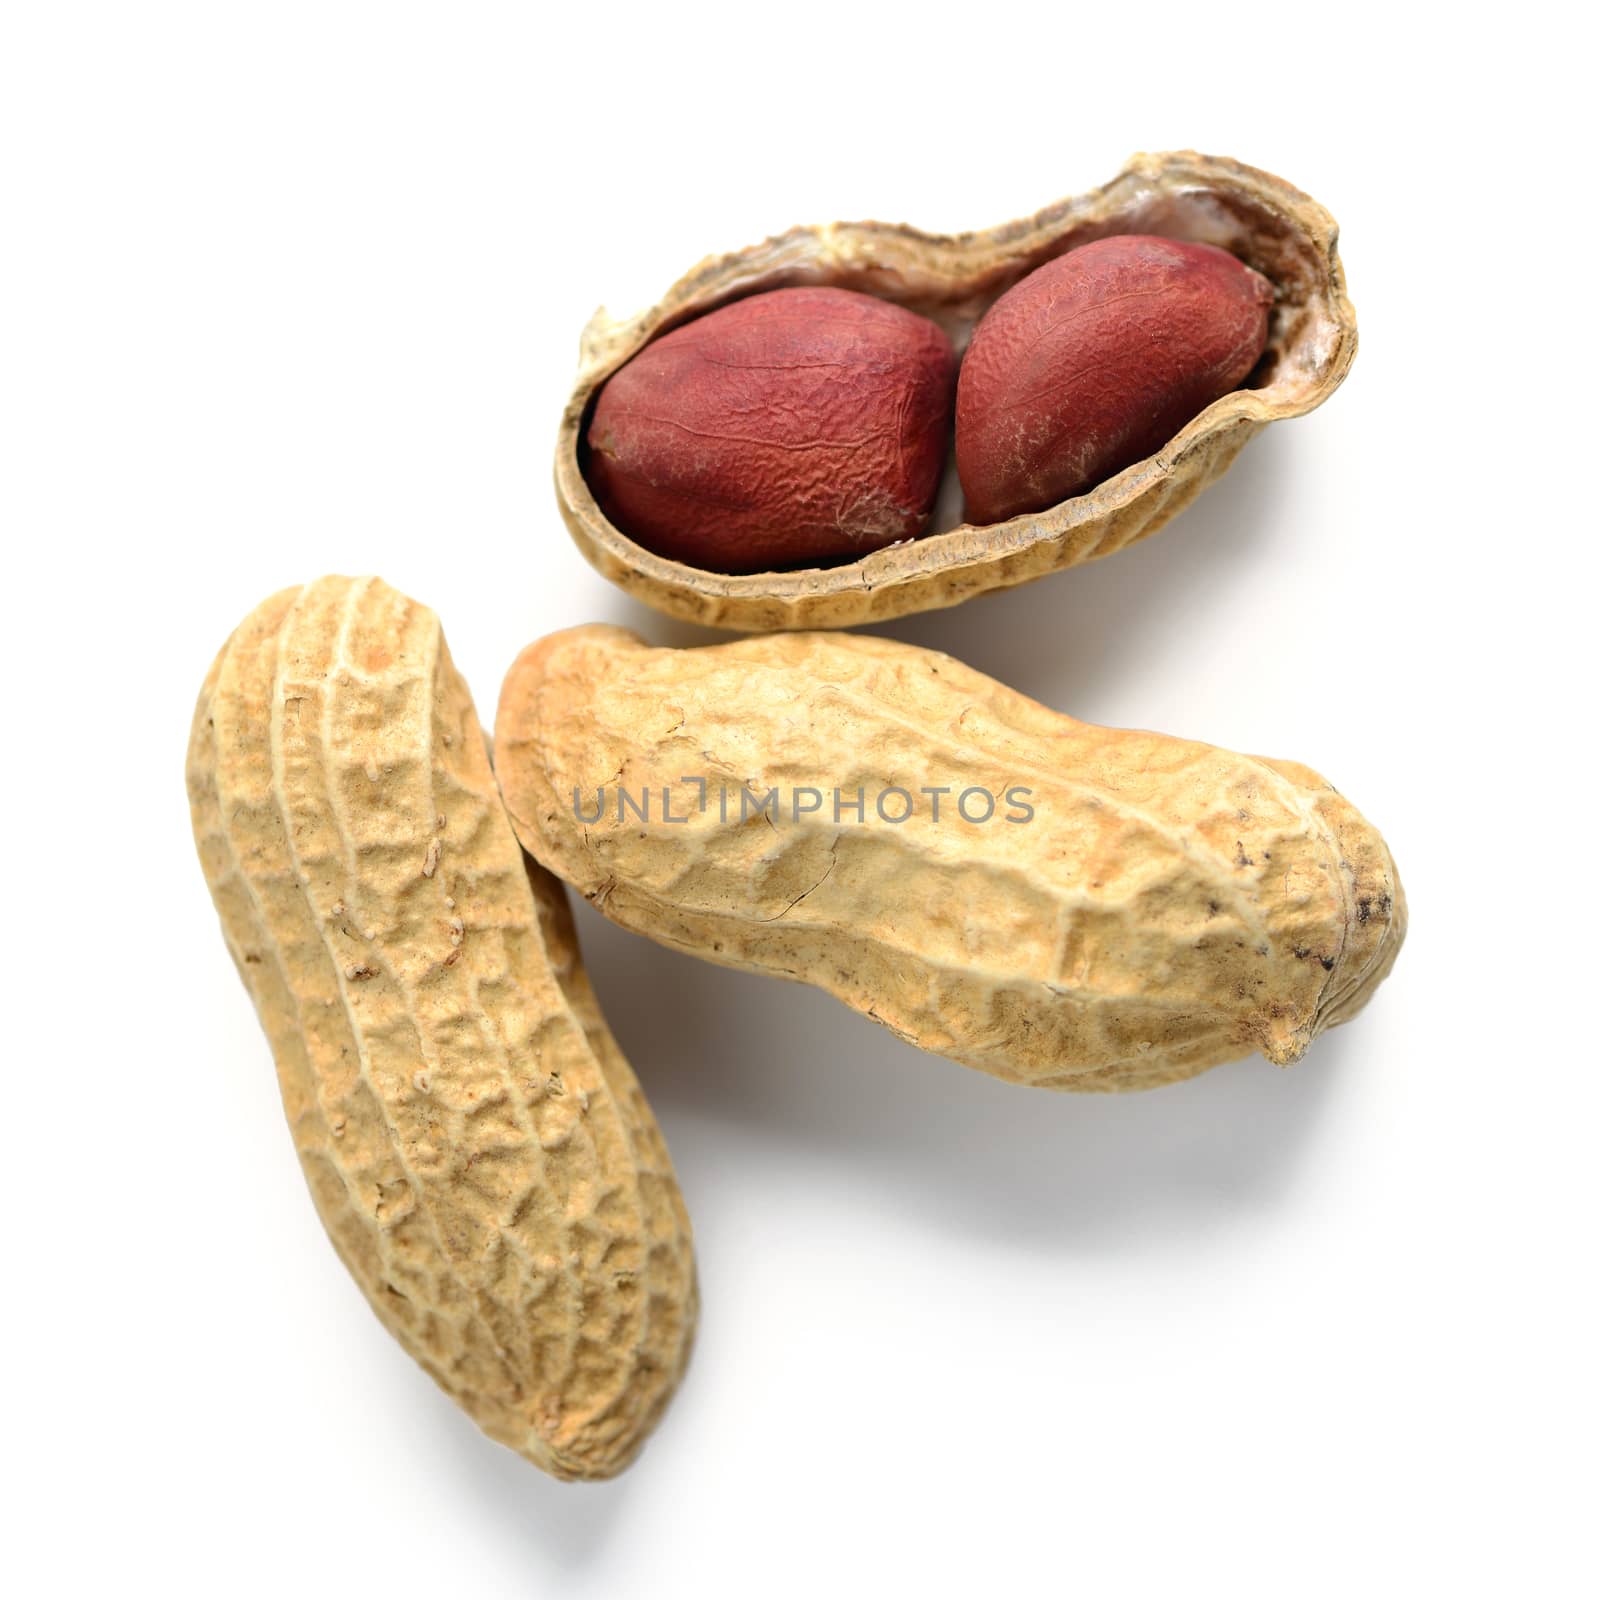 peanut by antpkr